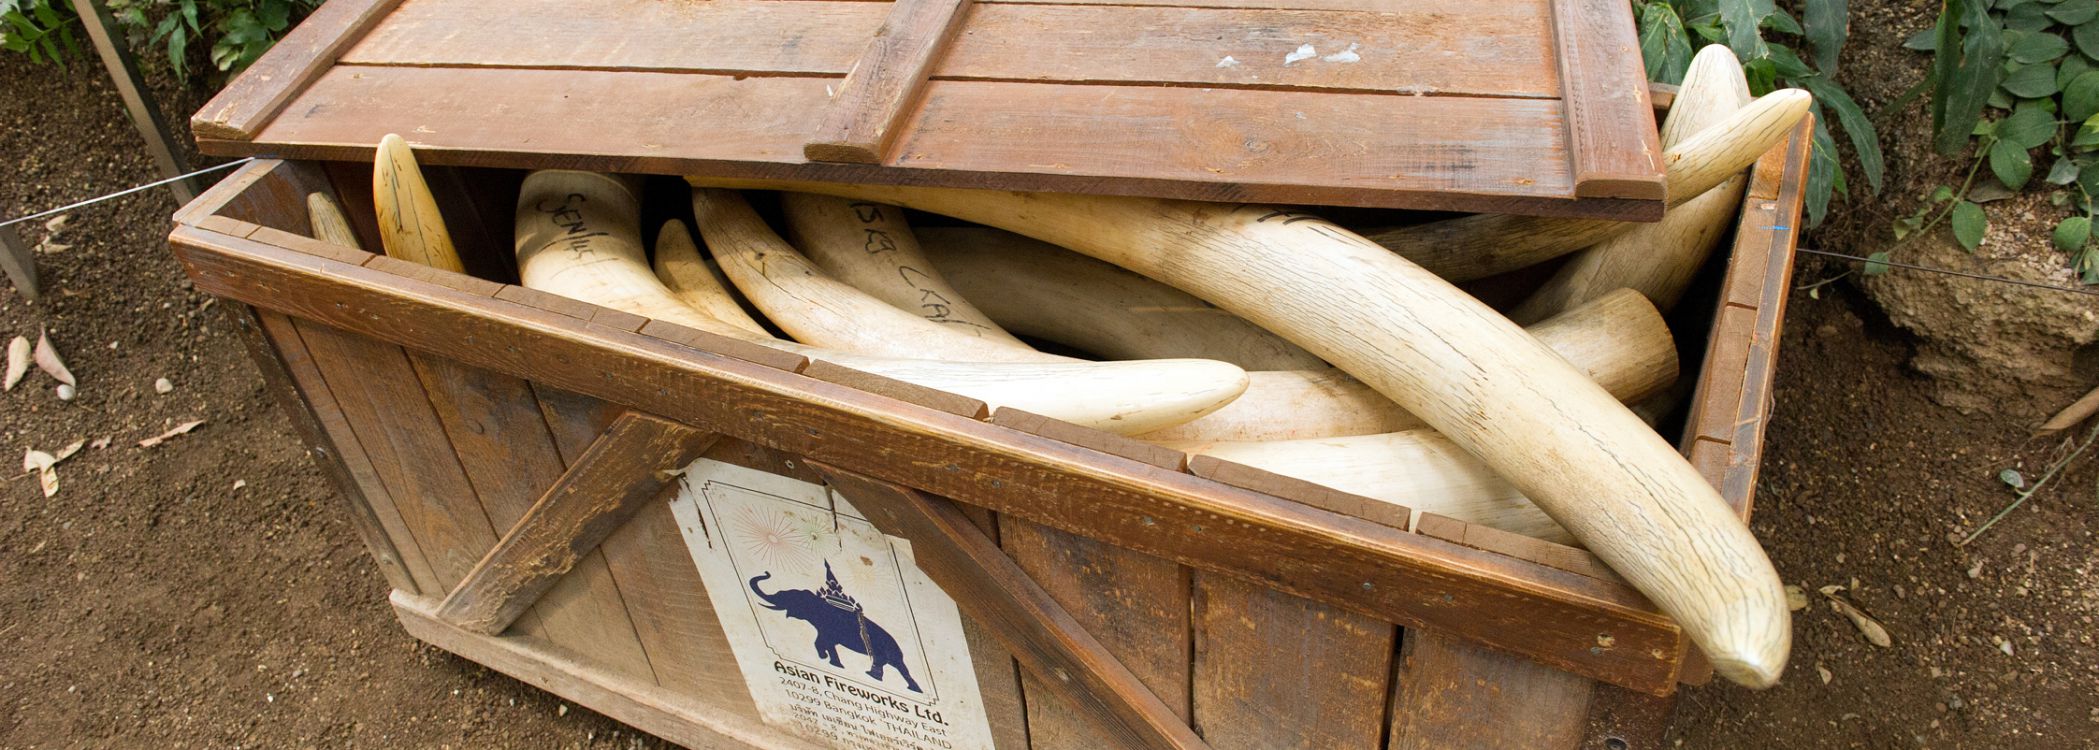 ivory smuggling